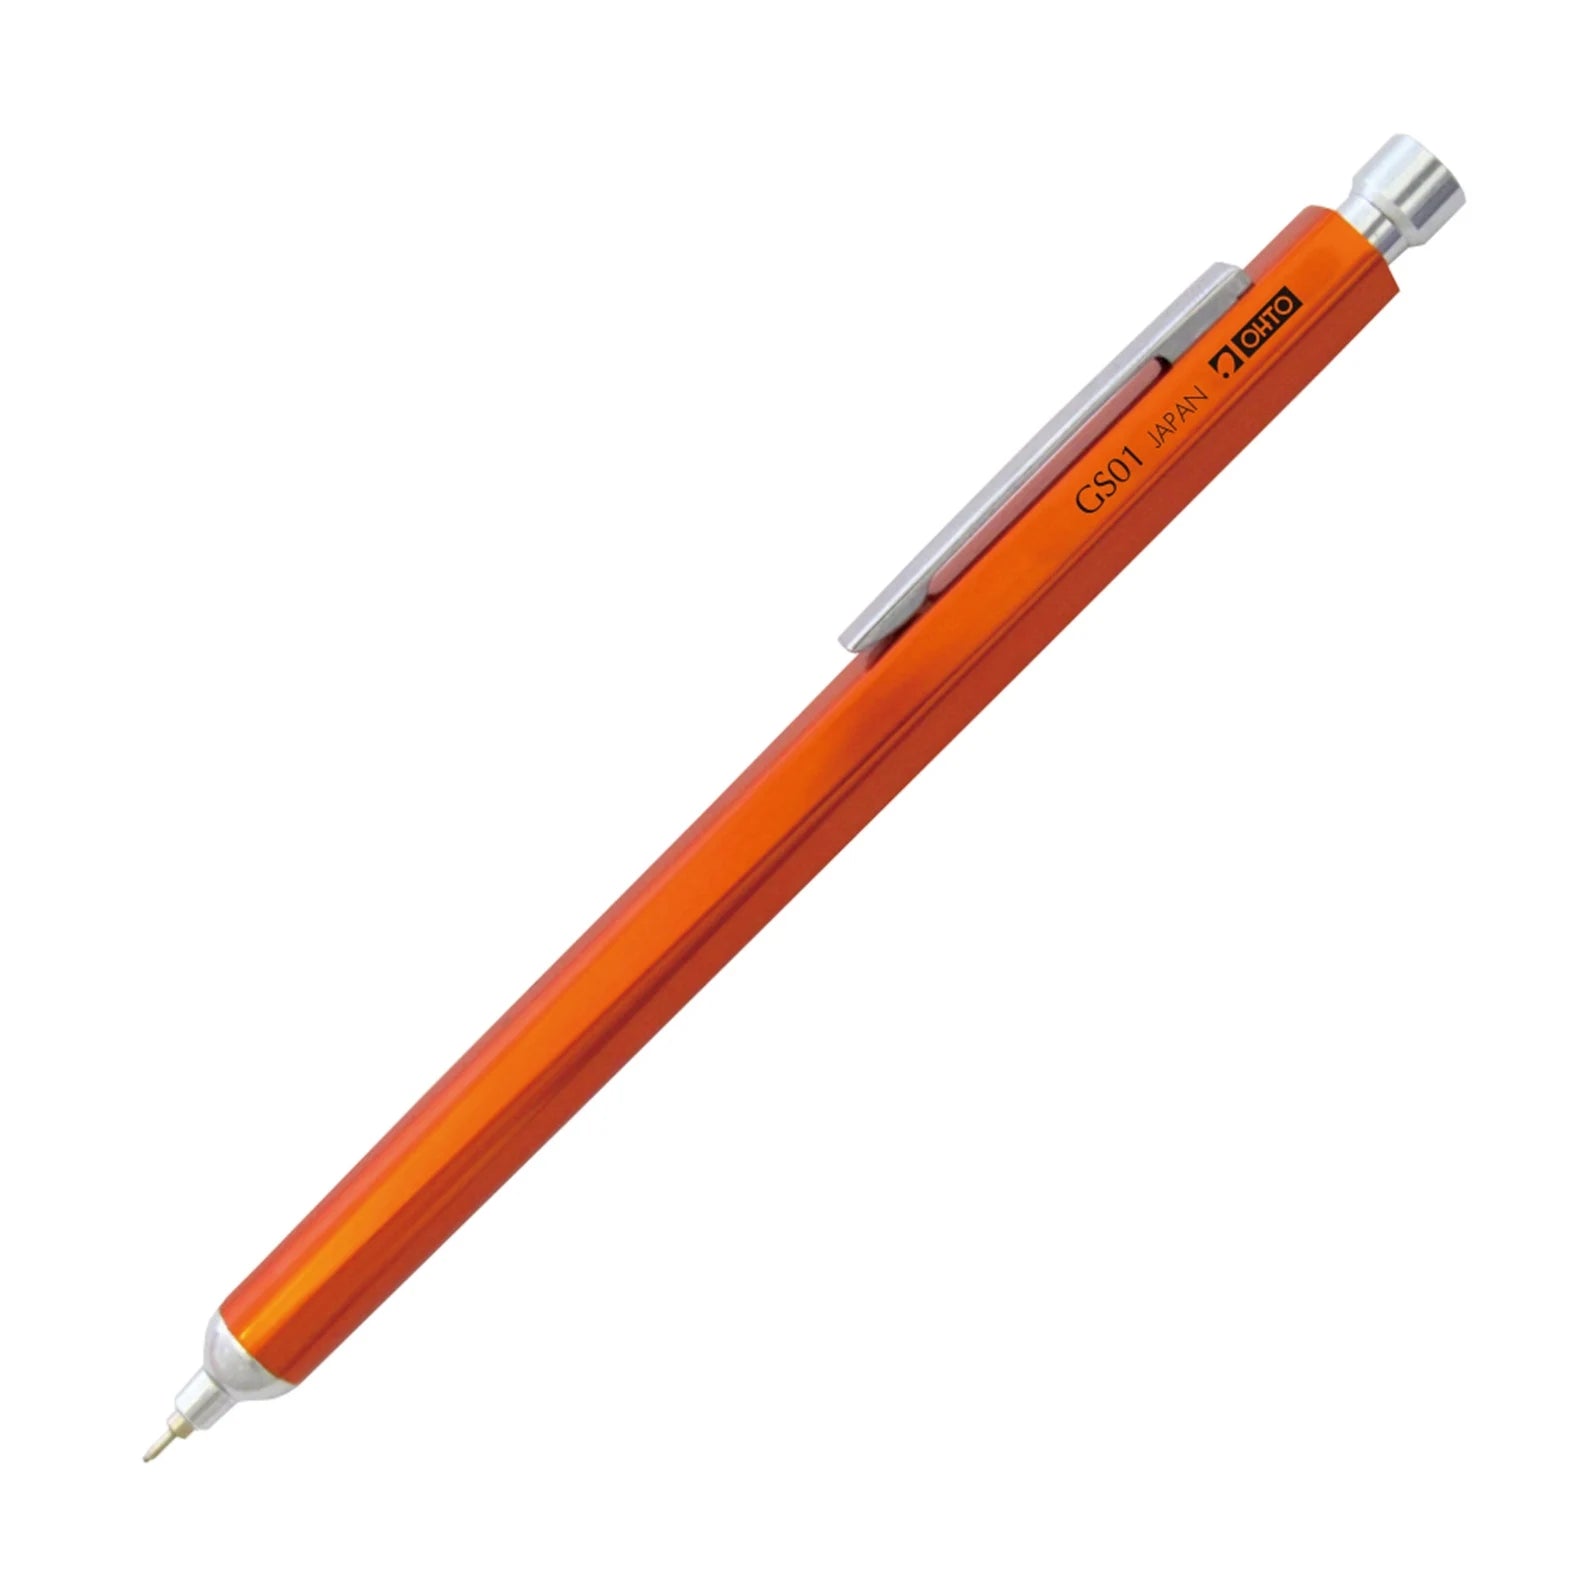 Horizon Needle Point Pen - GS01